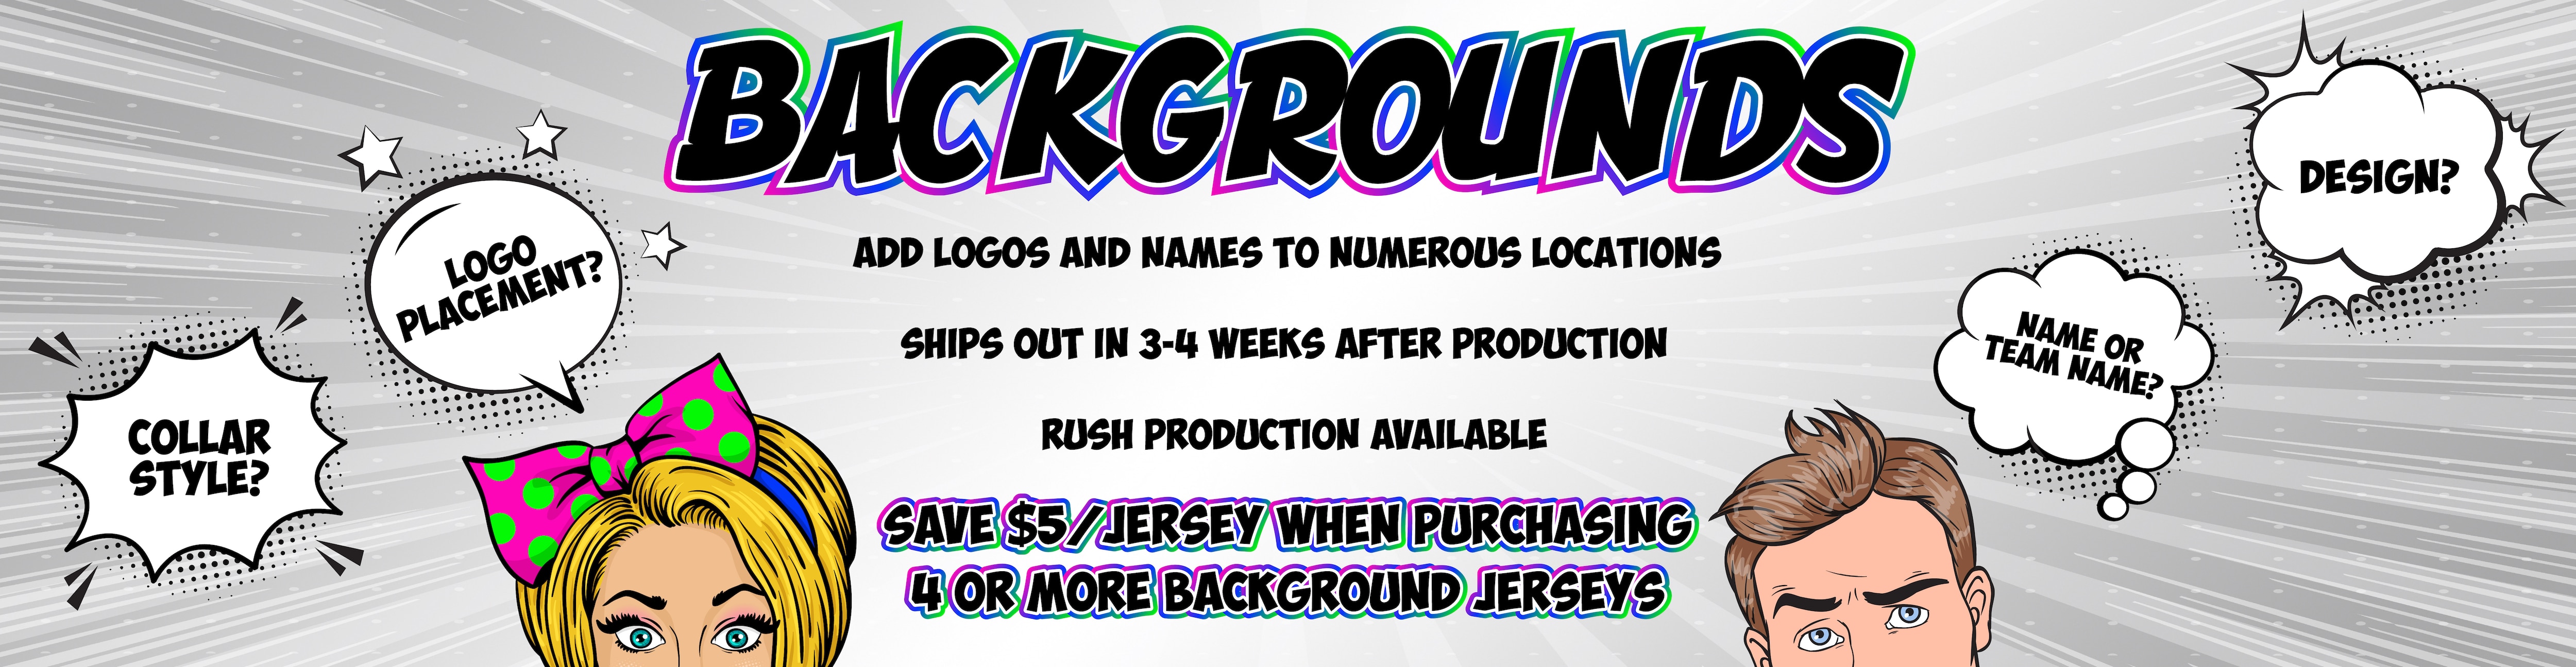 Background Jerseys Color Blocks Logo